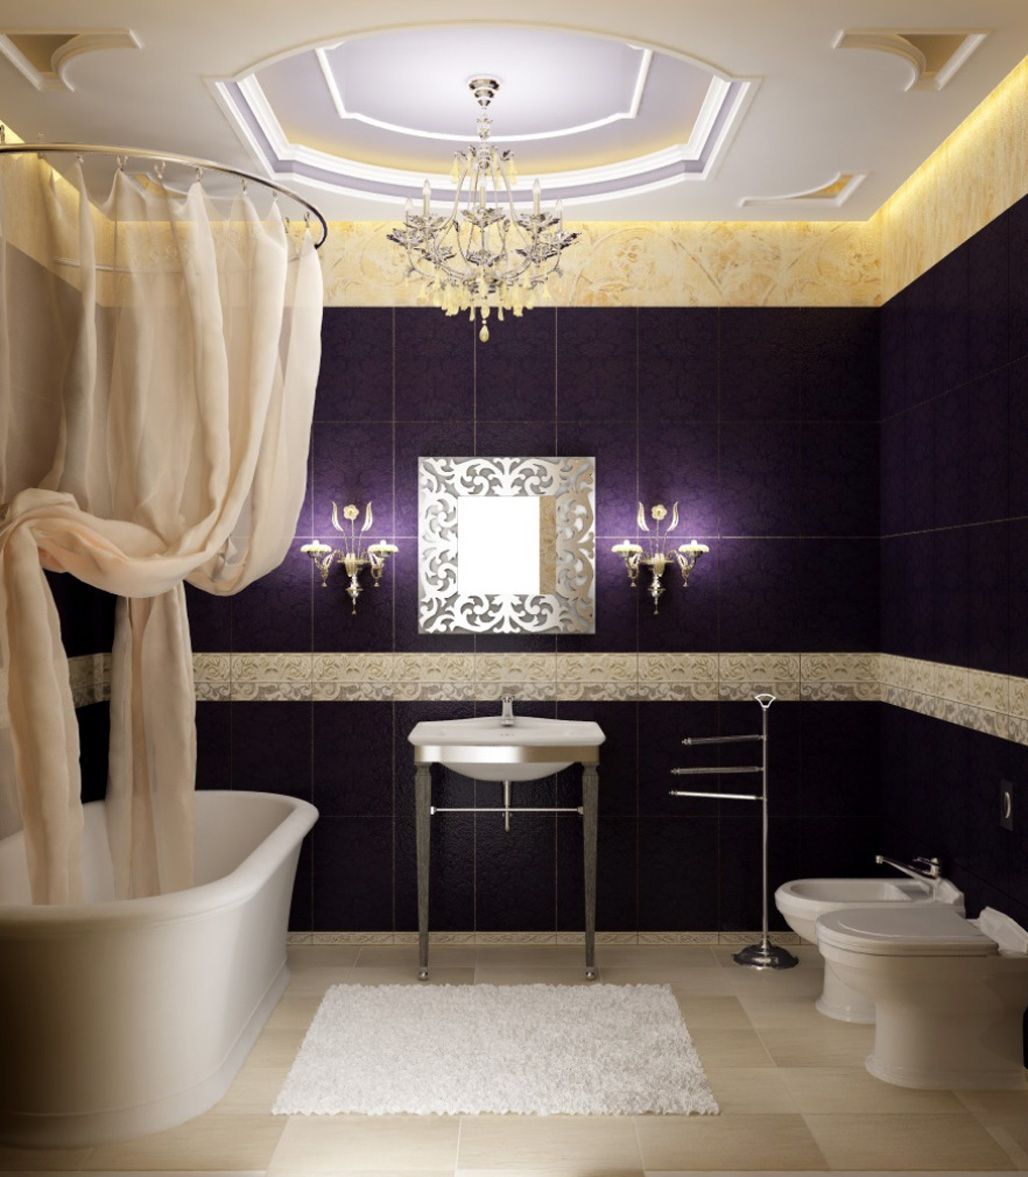 Beautiful Bathroom Ceiling Lights Home Design John With Regard To Chandelier Bathroom Ceiling Lights (View 12 of 25)